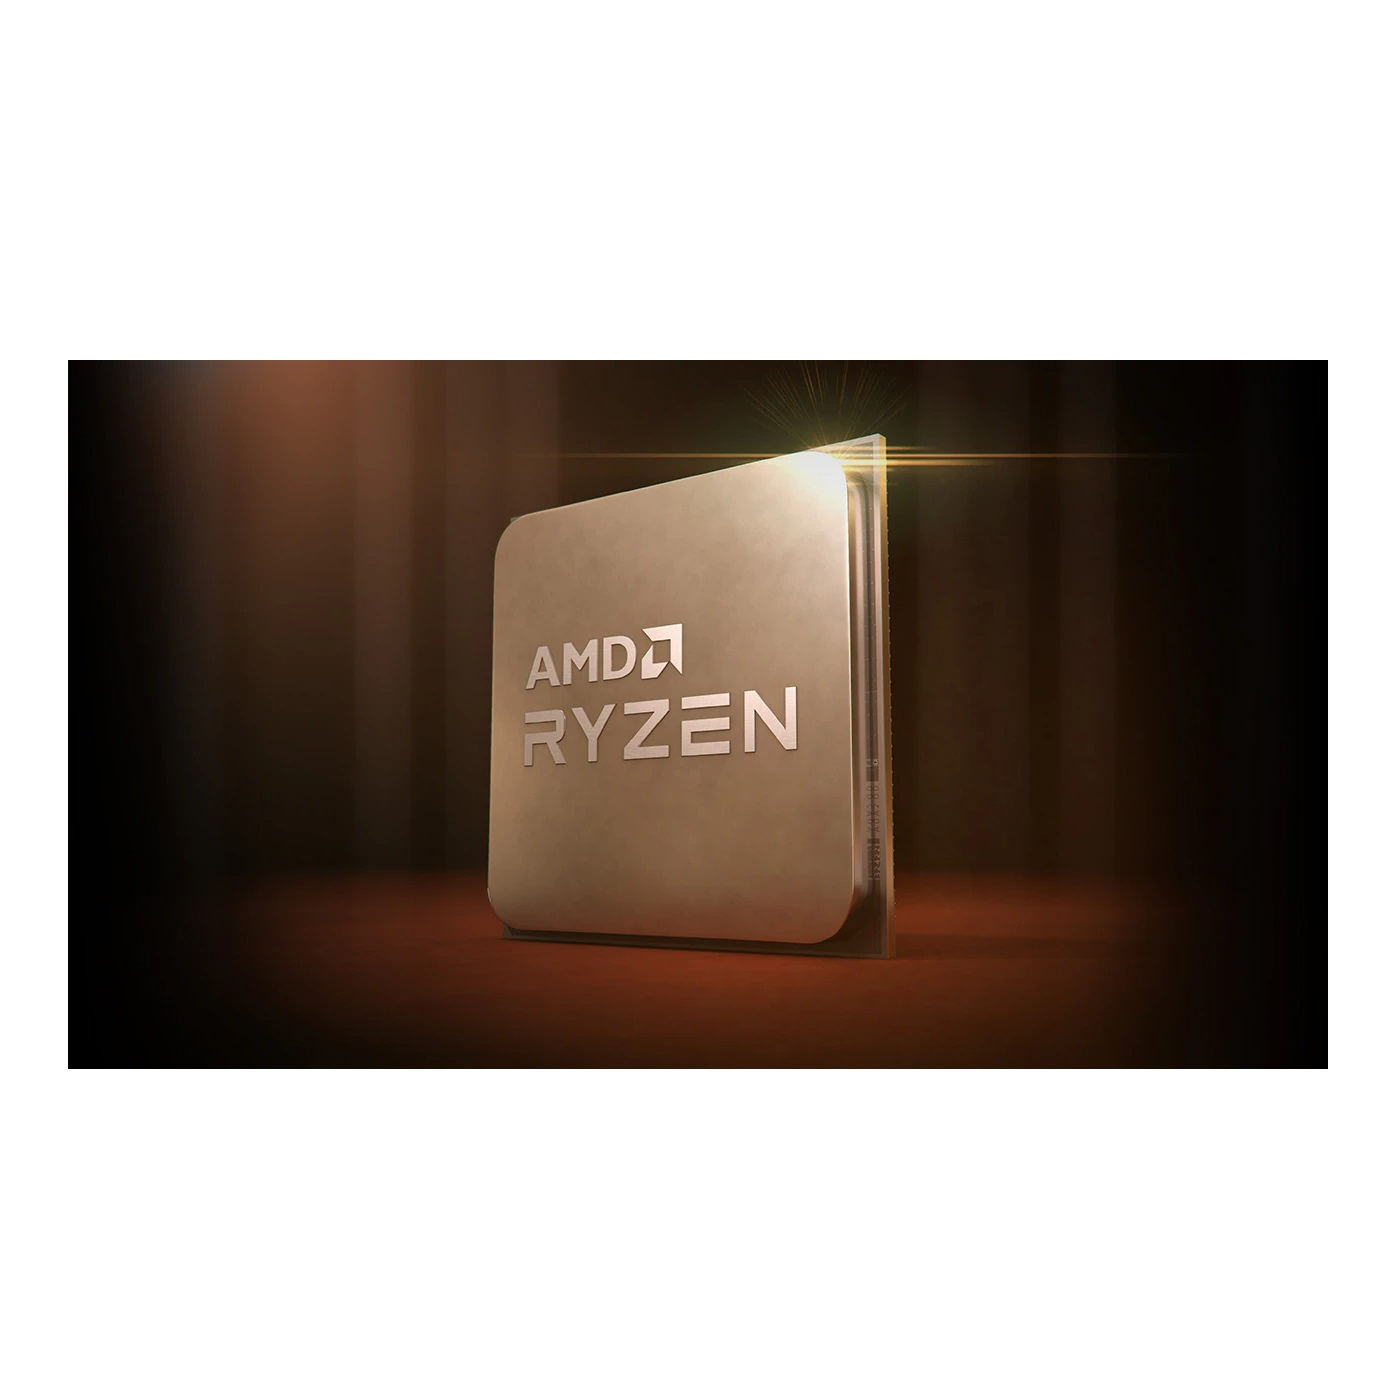 PROCESADOR AMD RYZEN 5 5600X 3.7GHZ 4.6GHZ AM4 5TAGEN 100-100000065BOX